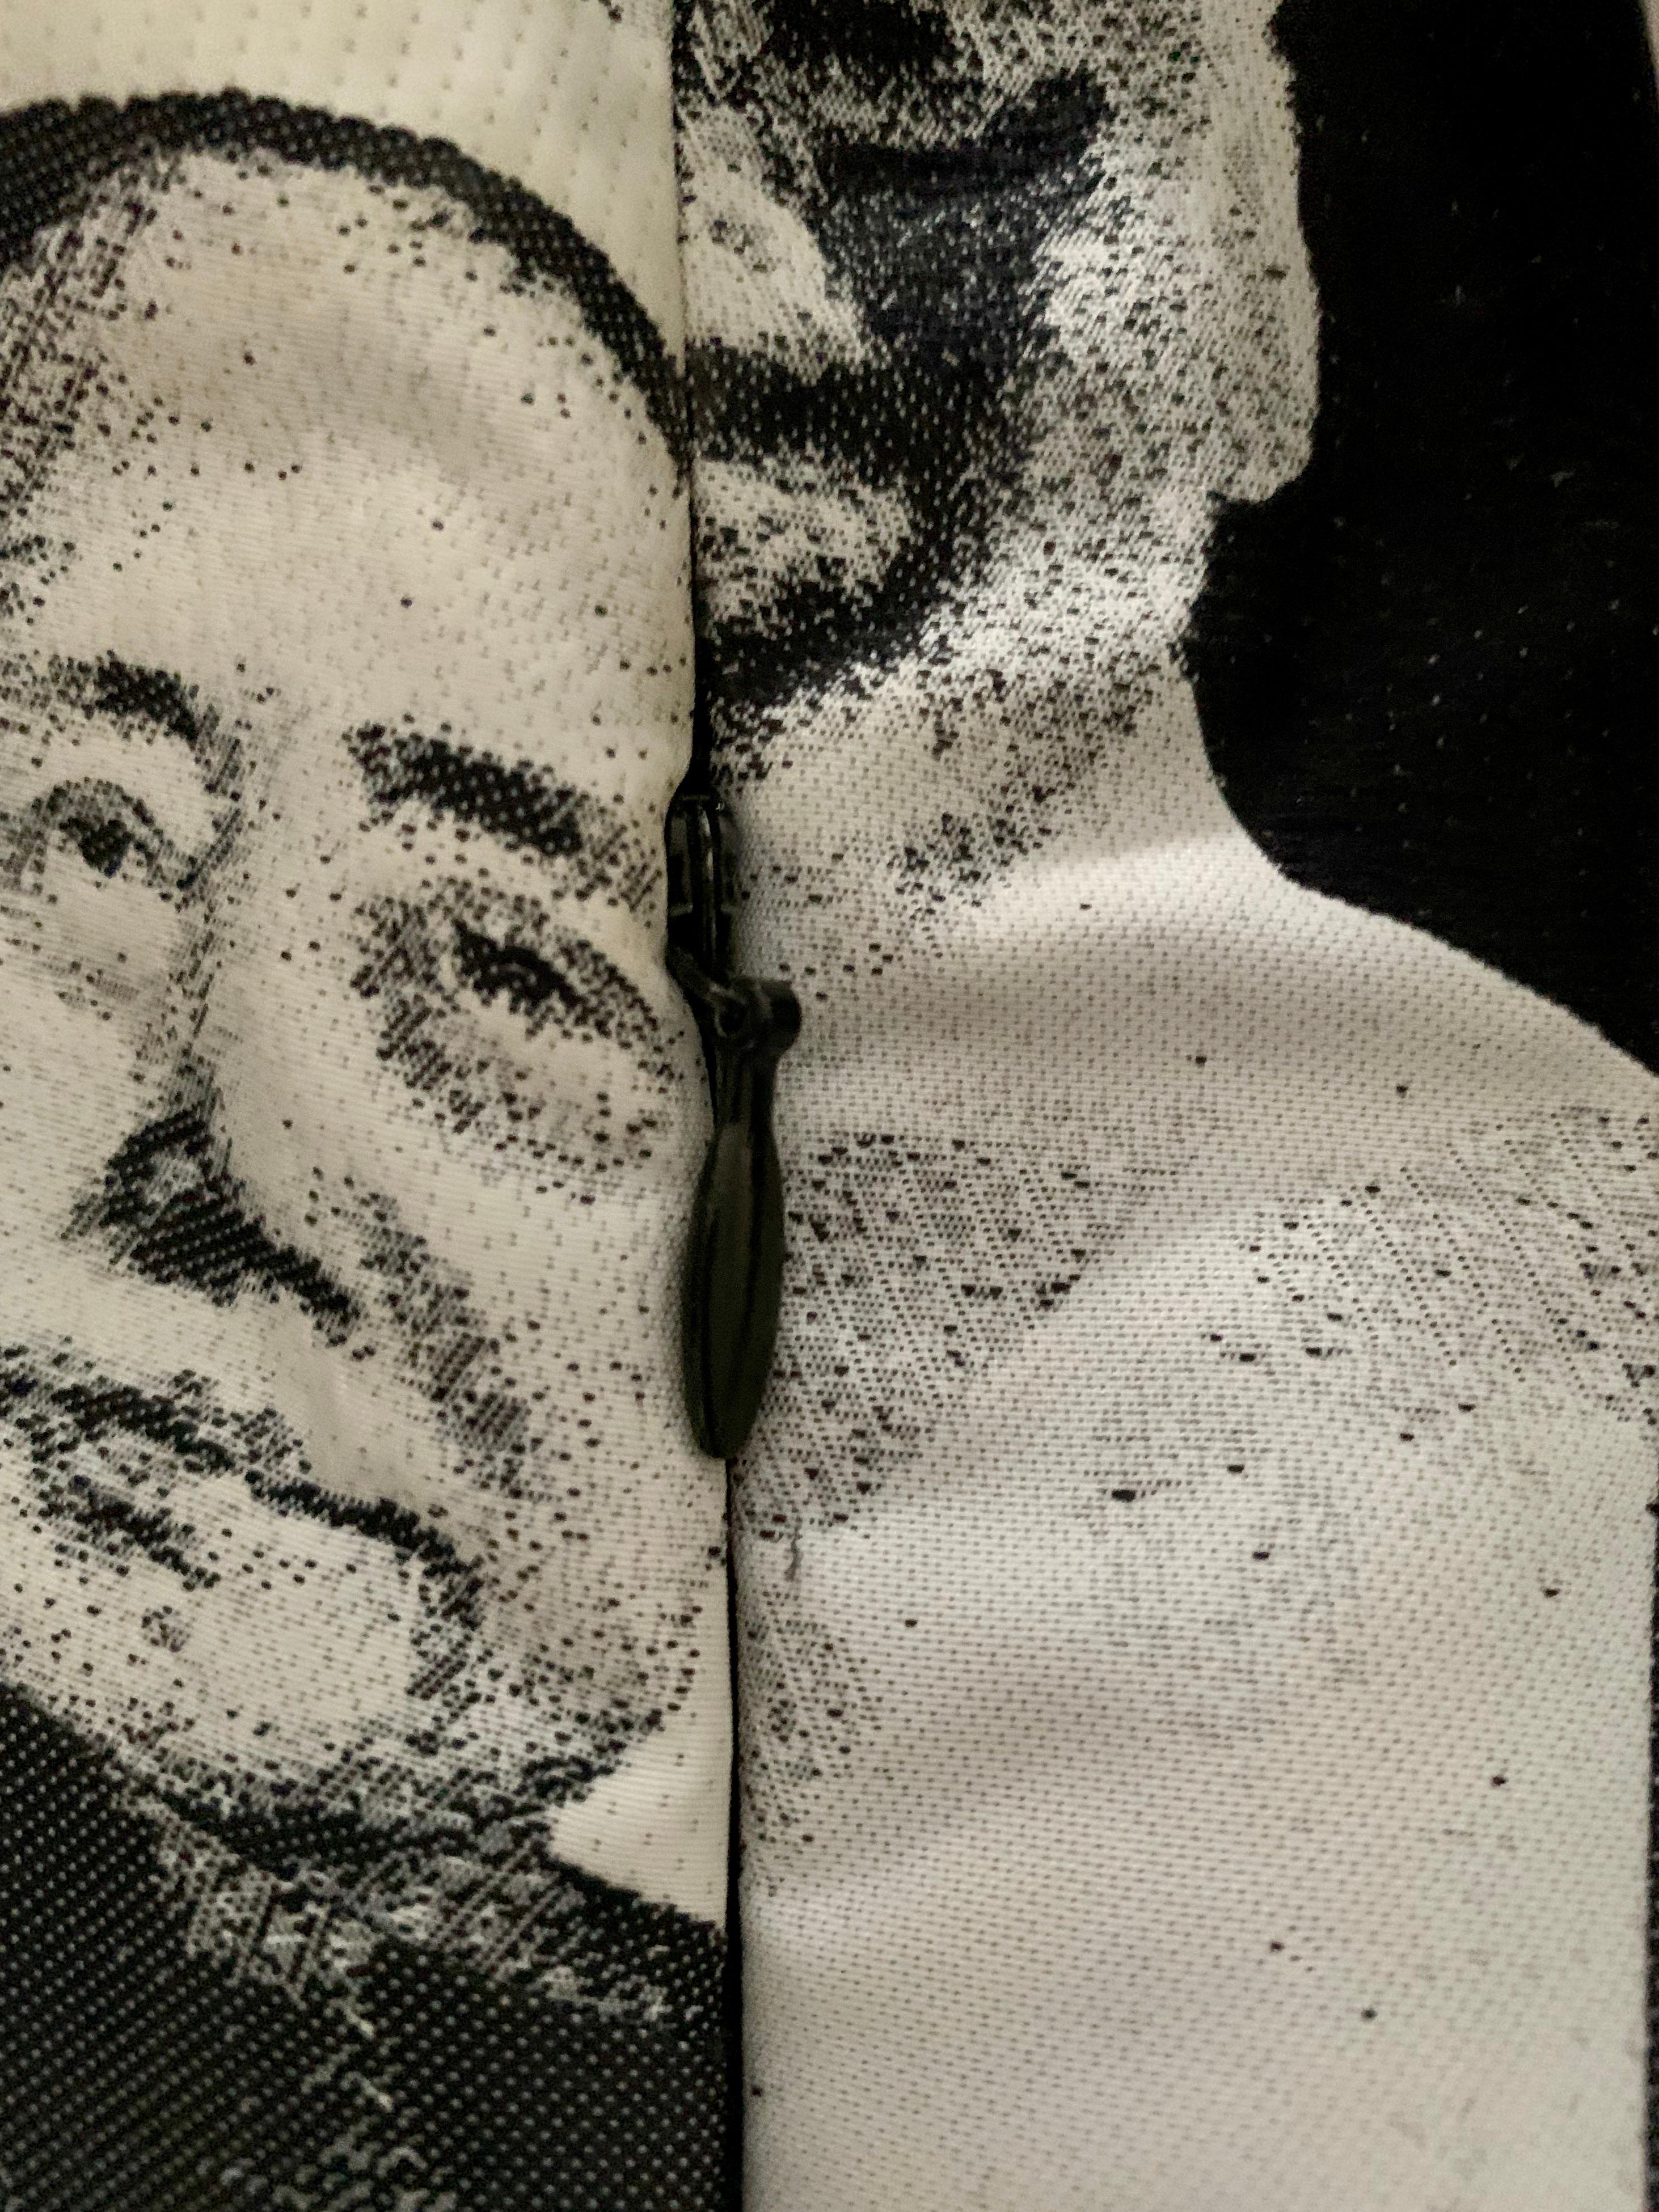 Dyed Vivienne Tam 'Chairman Mao' Black & White Warhol Print Vintage Dress, 1990s